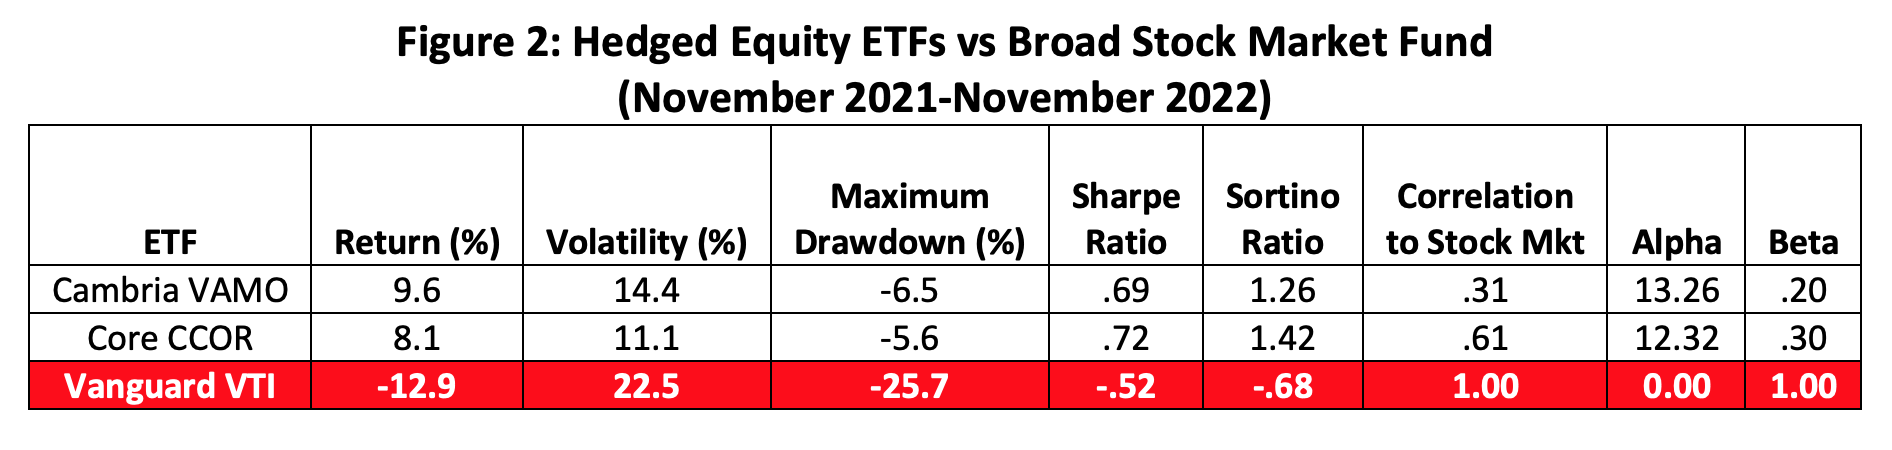 Hedget Equity ETFs vs Broad Stock Market Fund, November 2021 - November 2022